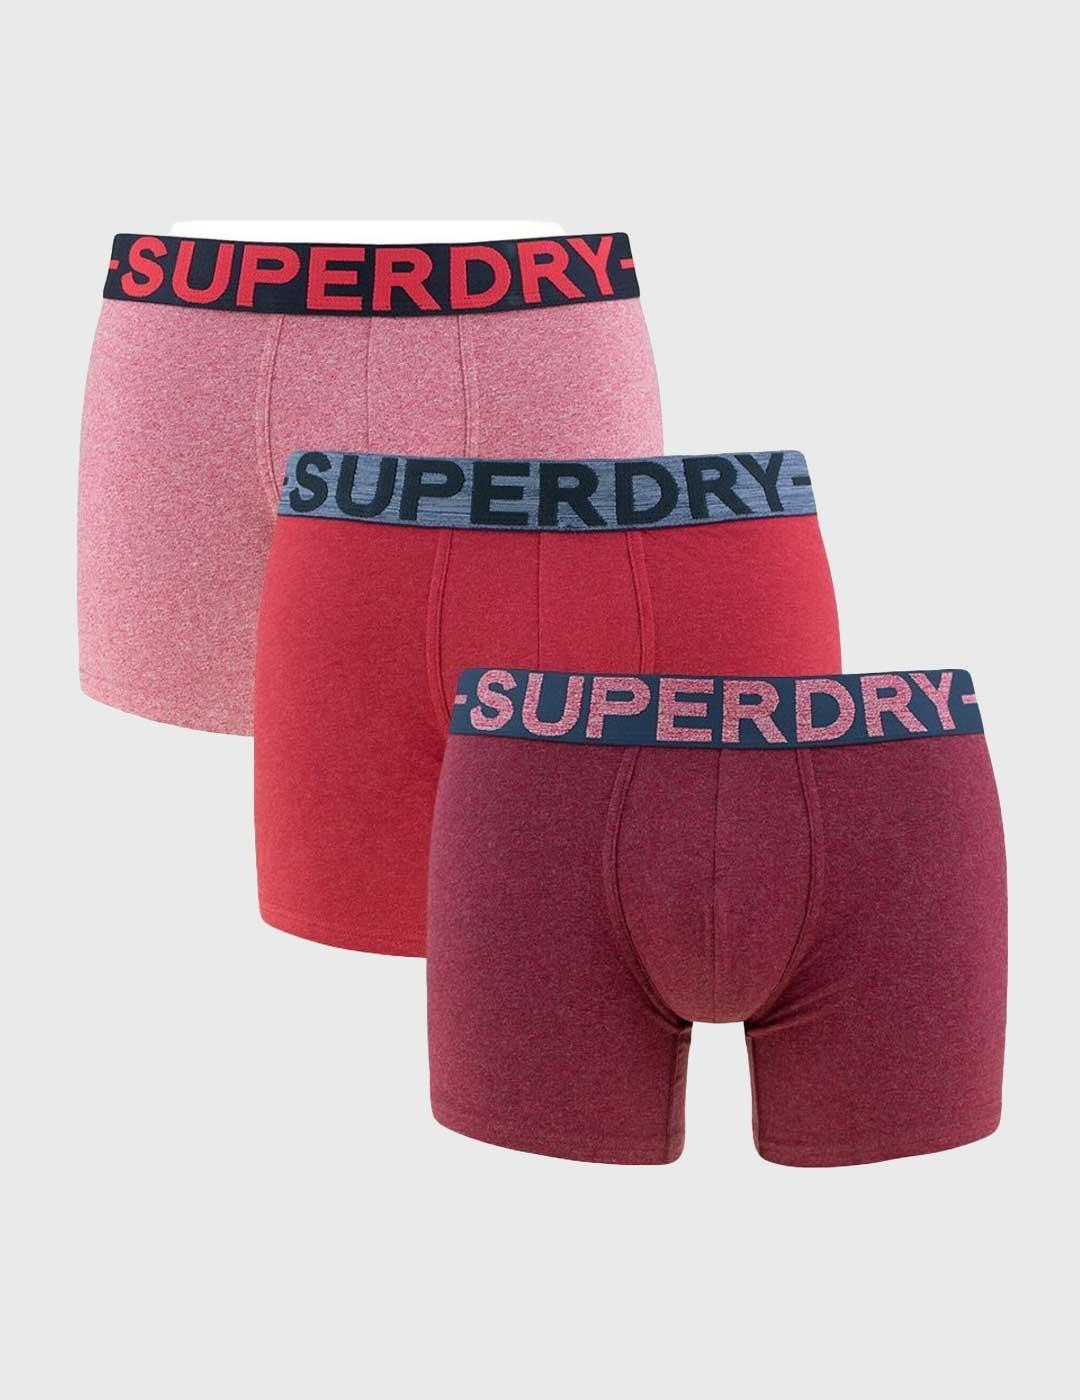 Superdry Boxer Triple Pack Calzoncillos rojos para hombre